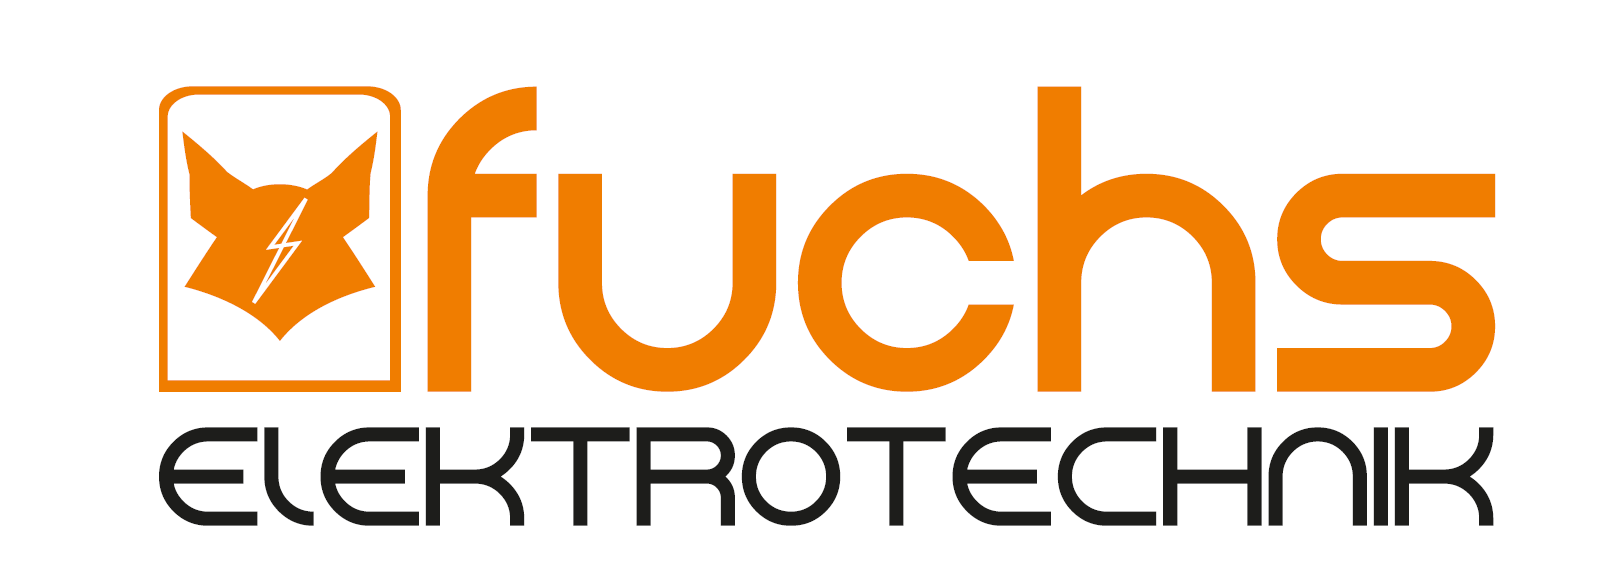 Elektrotechnik Fuchs